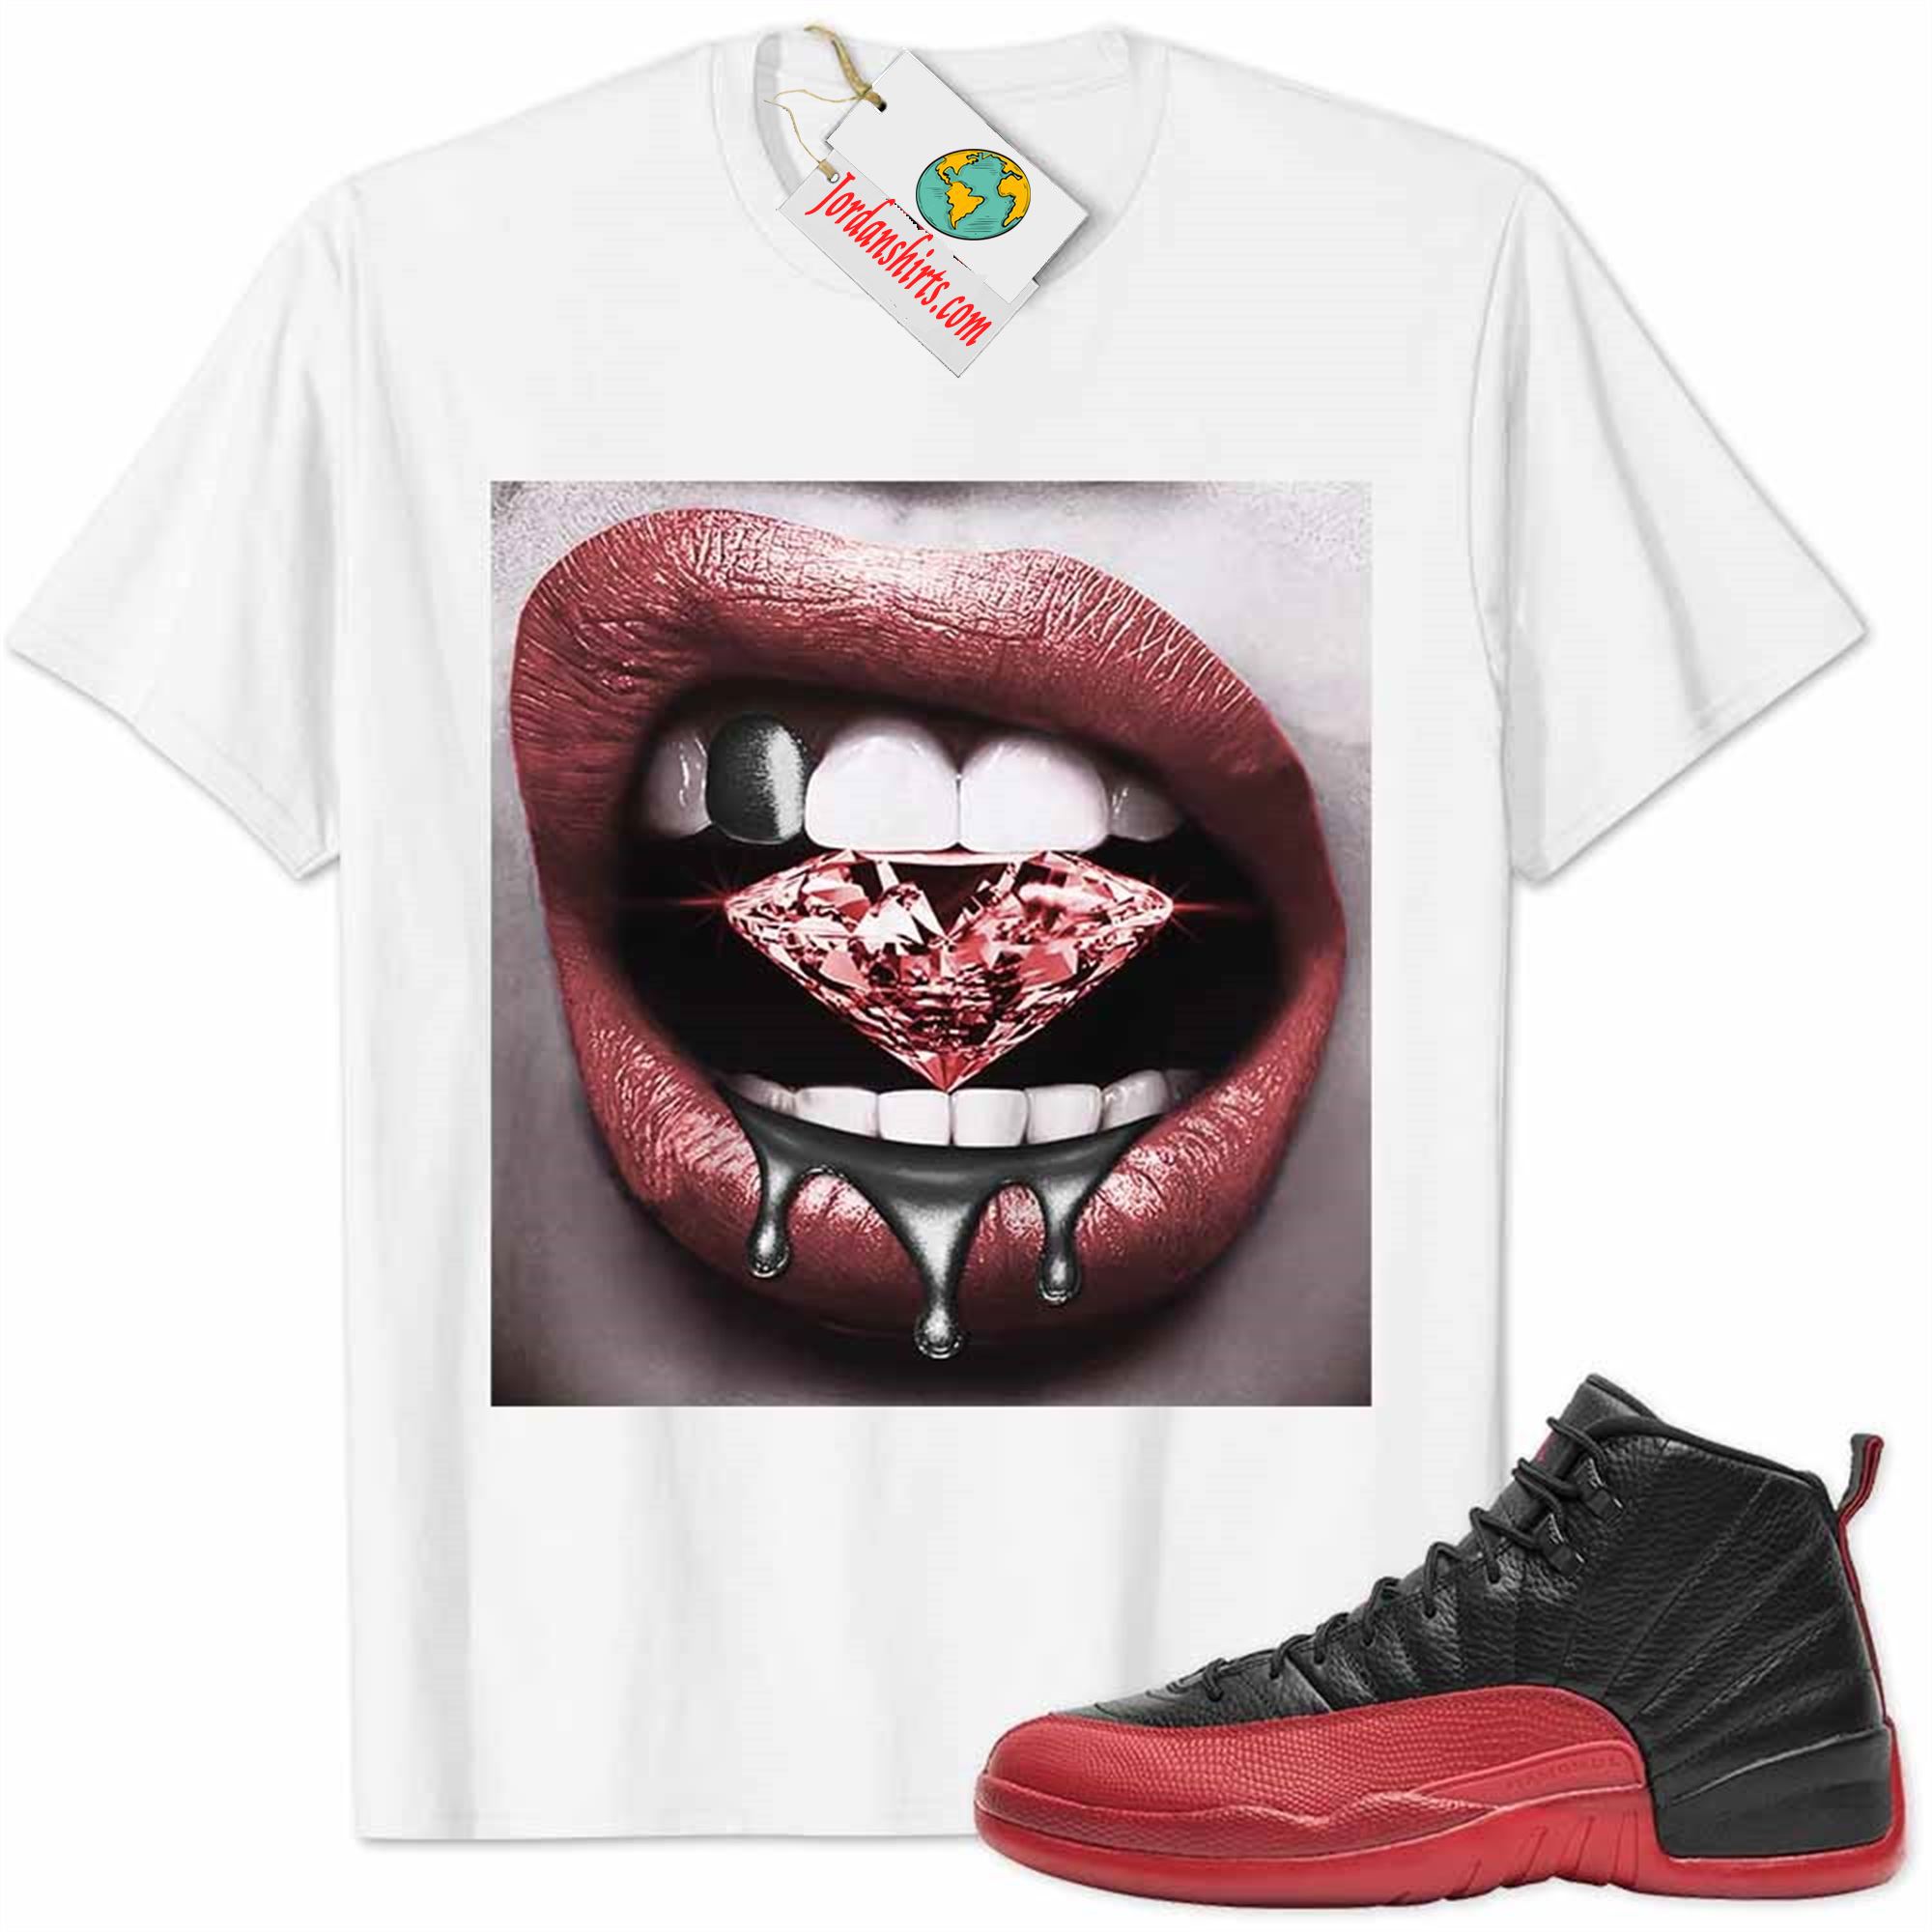 Jordan 12 Shirt, Jordan 12 Flu Game Shirt Sexy Lip Bite Diamond Dripping White Size Up To 5xl